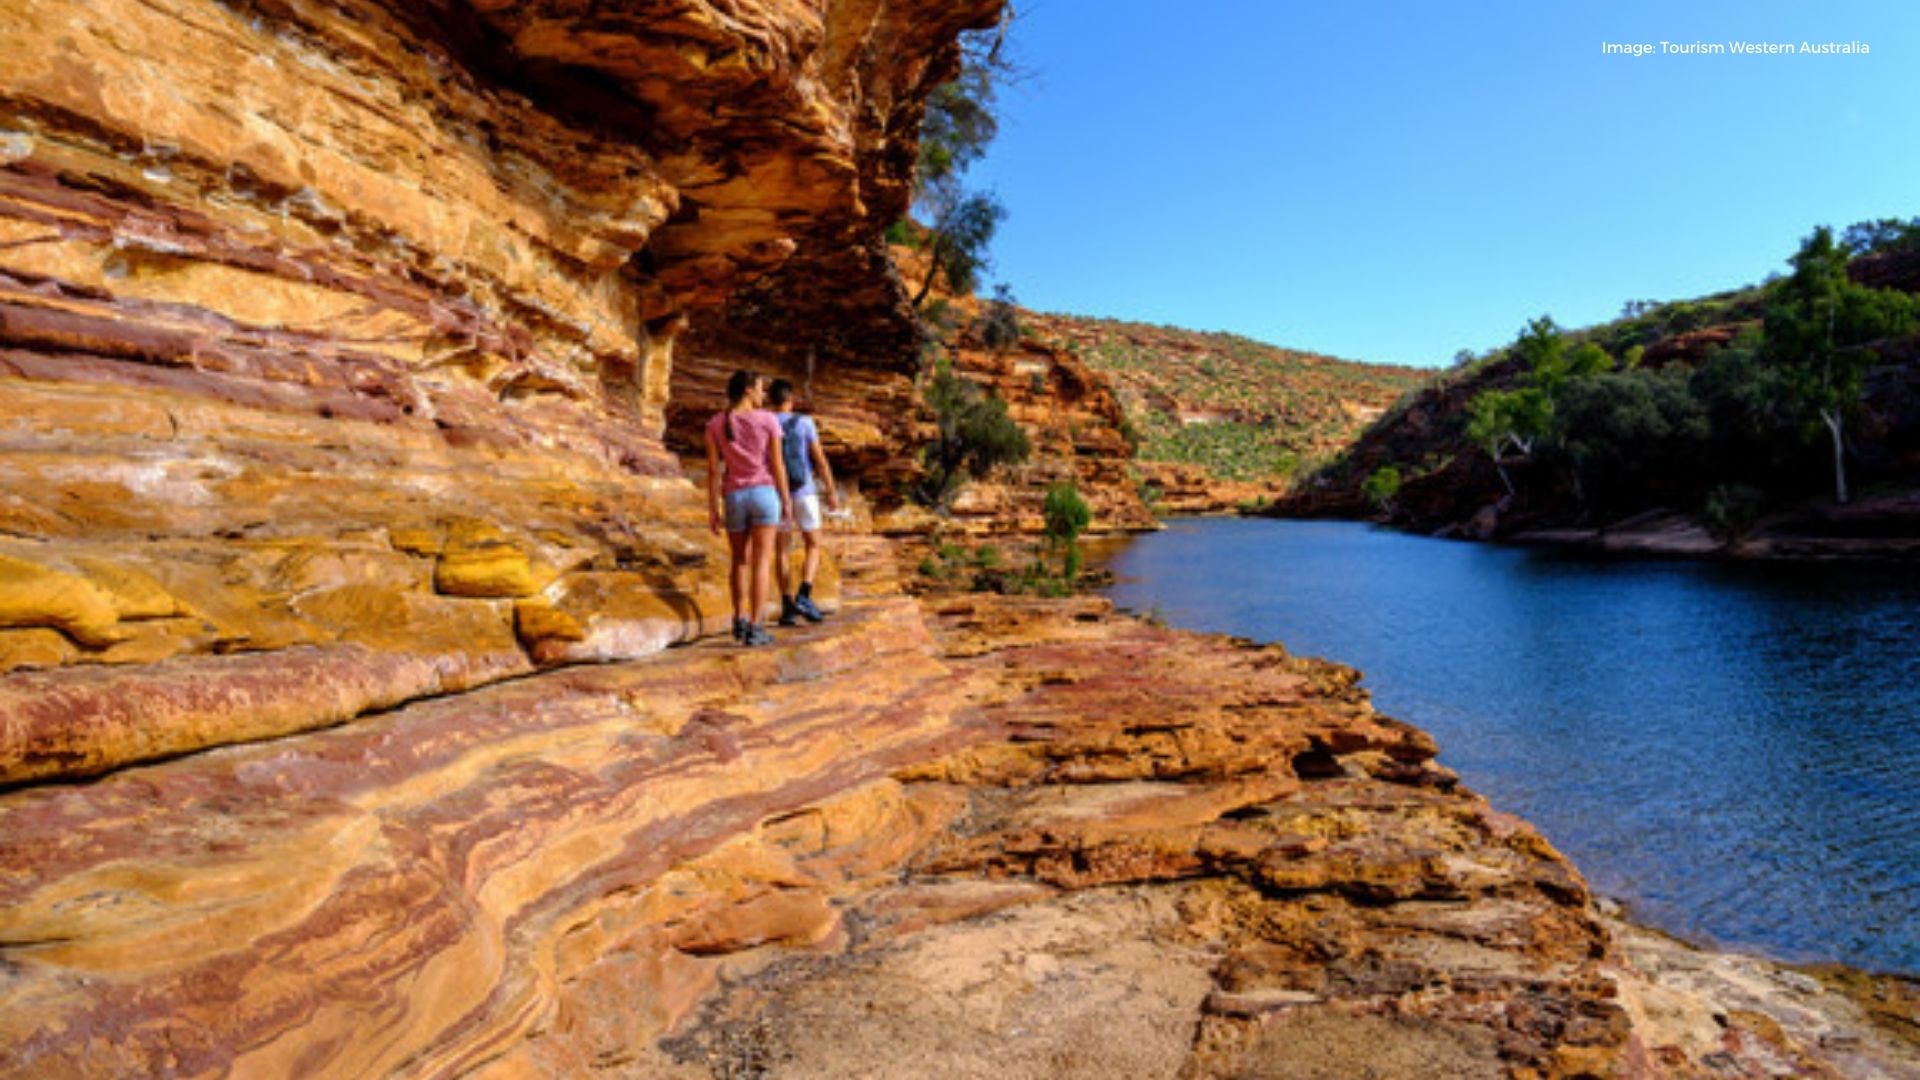 Couple walking on scenic rugged orange rock | Tourism Western Australia